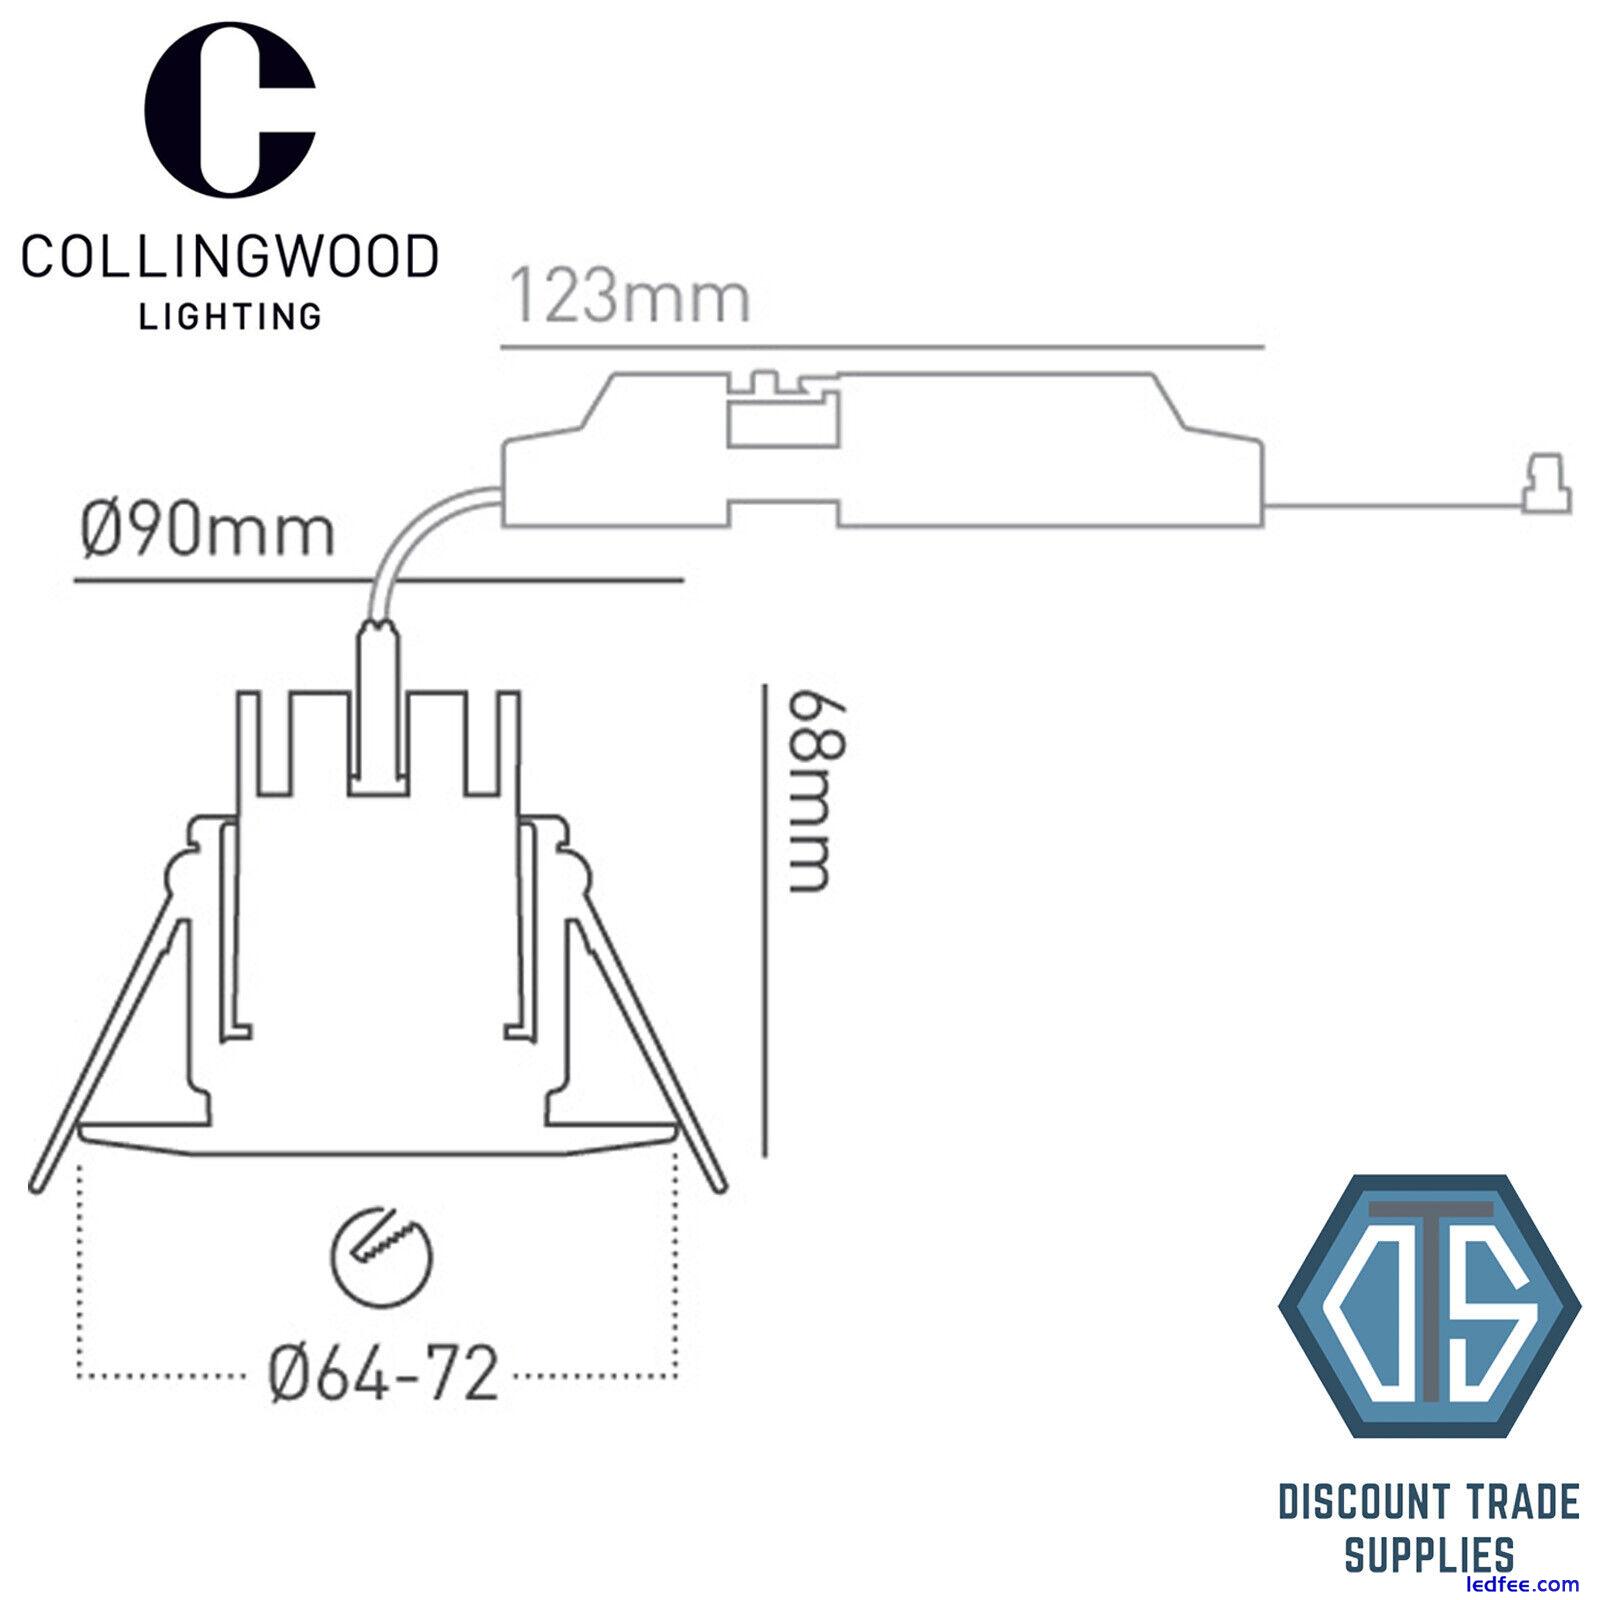 Collingwood H2 Lite Downlight Matt White 4000K Natural White DLT388MW5540 0 